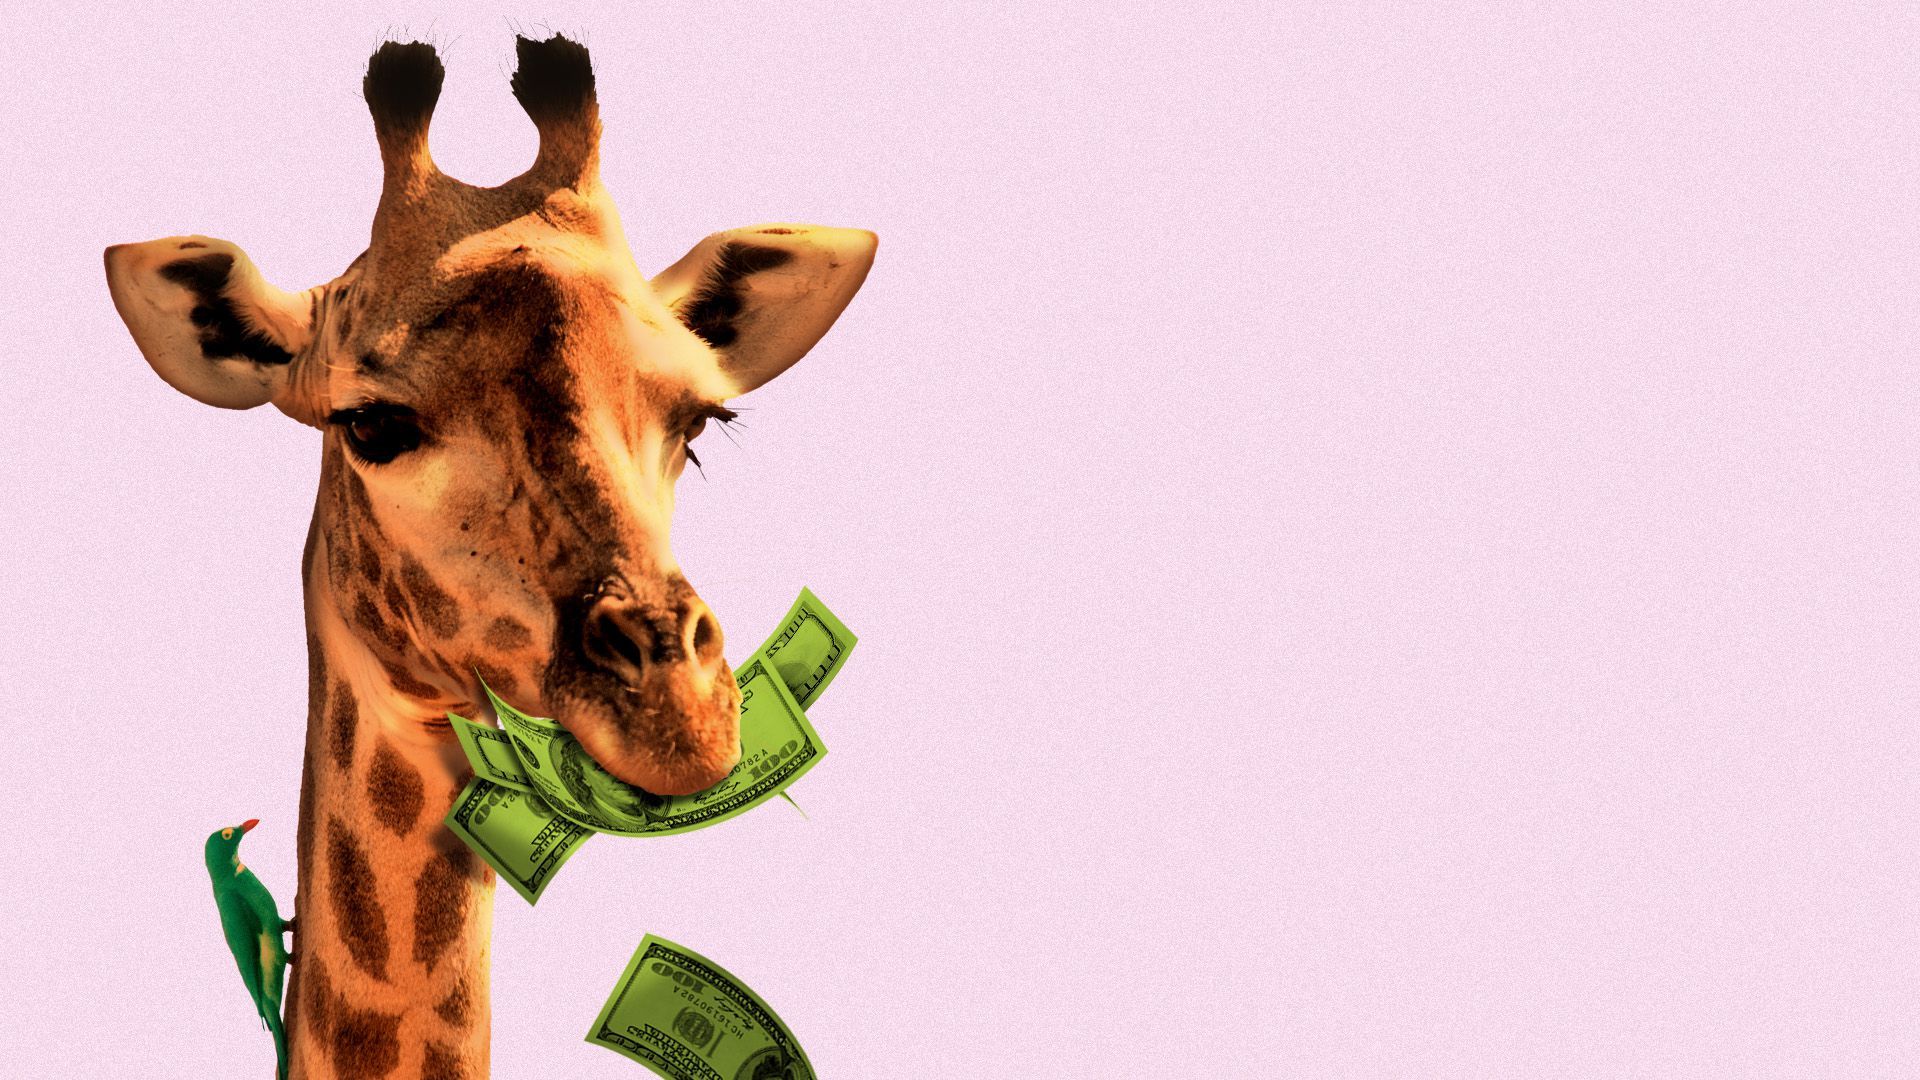 Illustration of a giraffe eating money